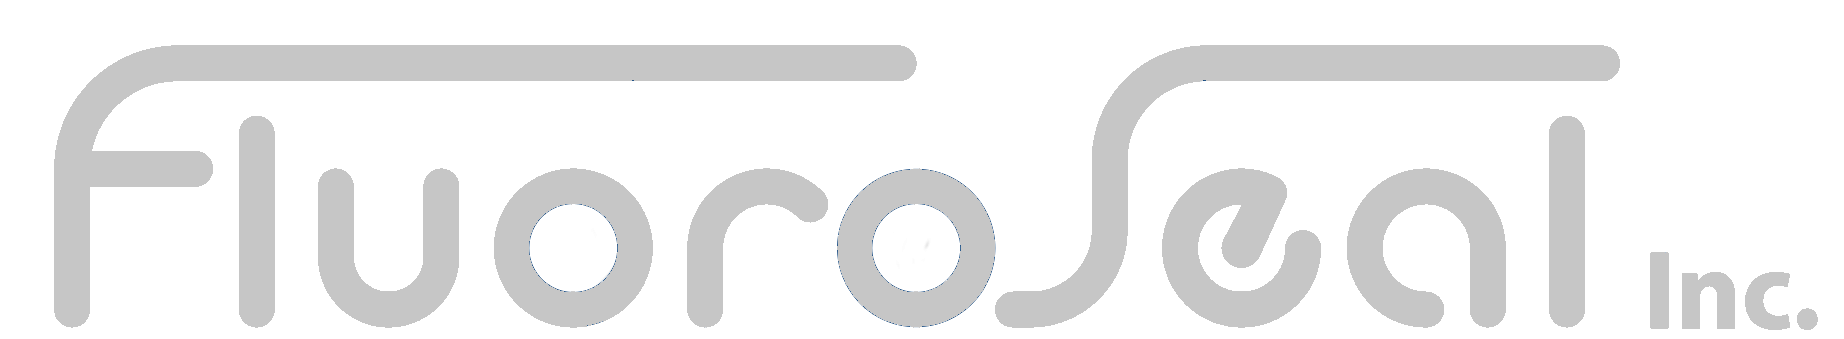 footer-logo-4.png